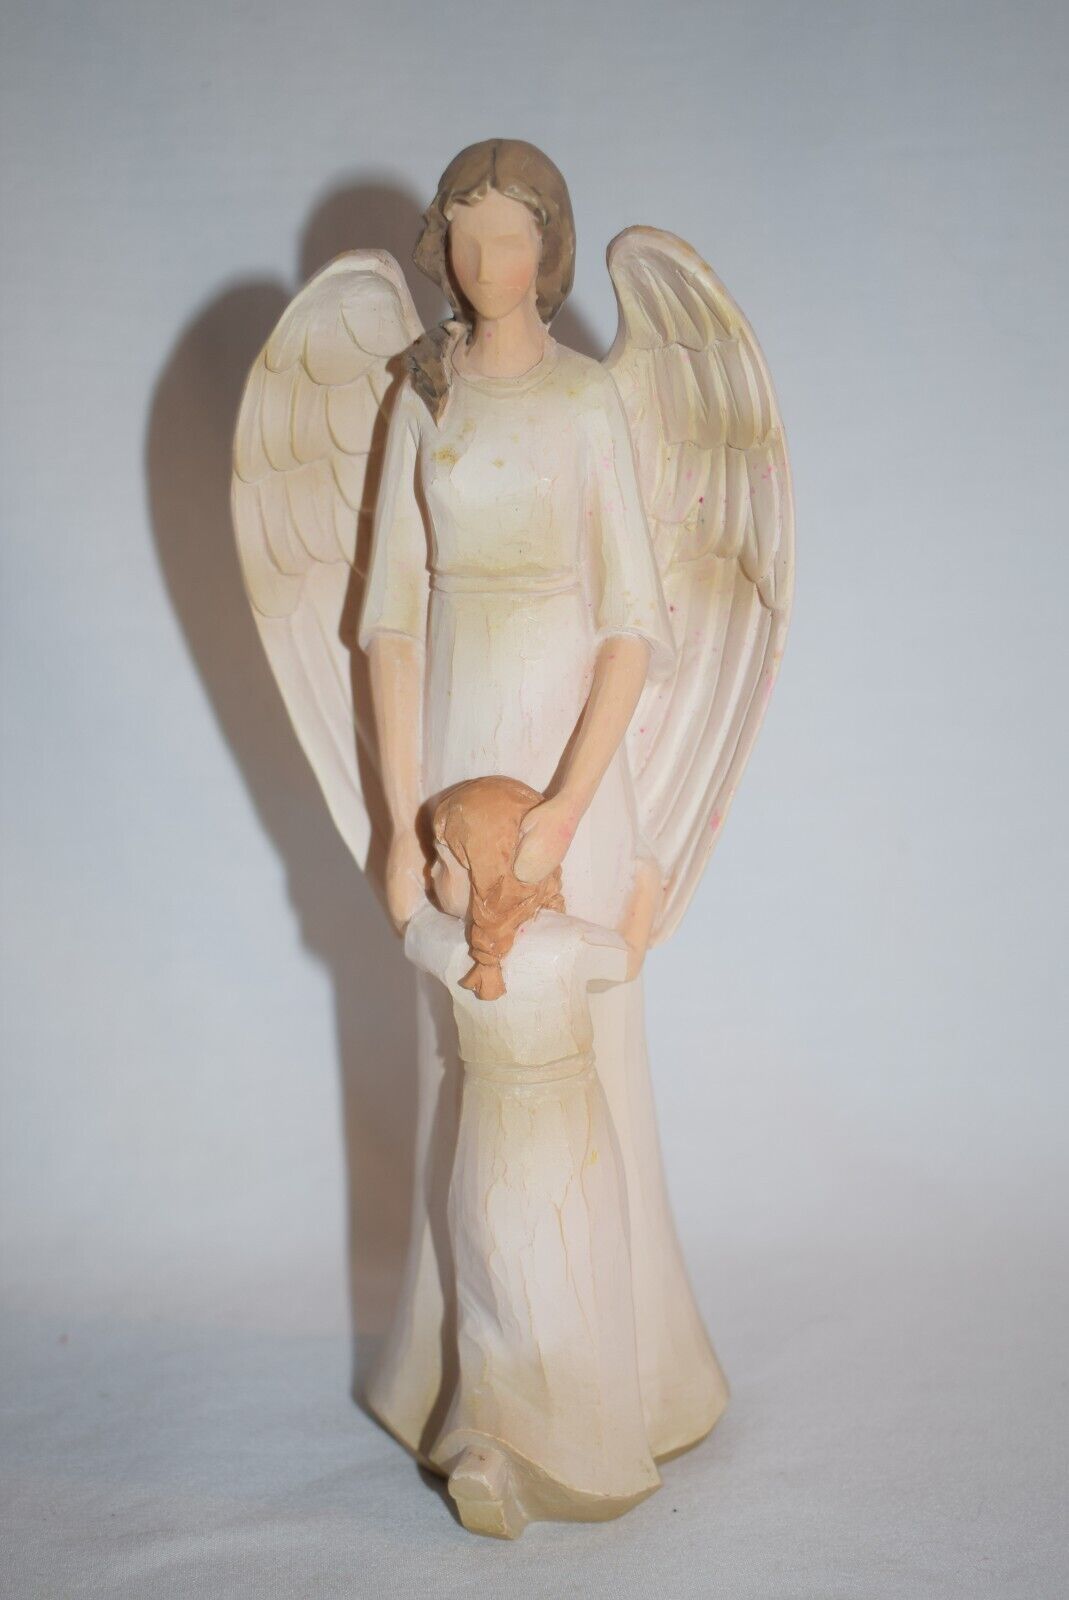 2006 Seagull Studios Guardian Angel with Child Figurine